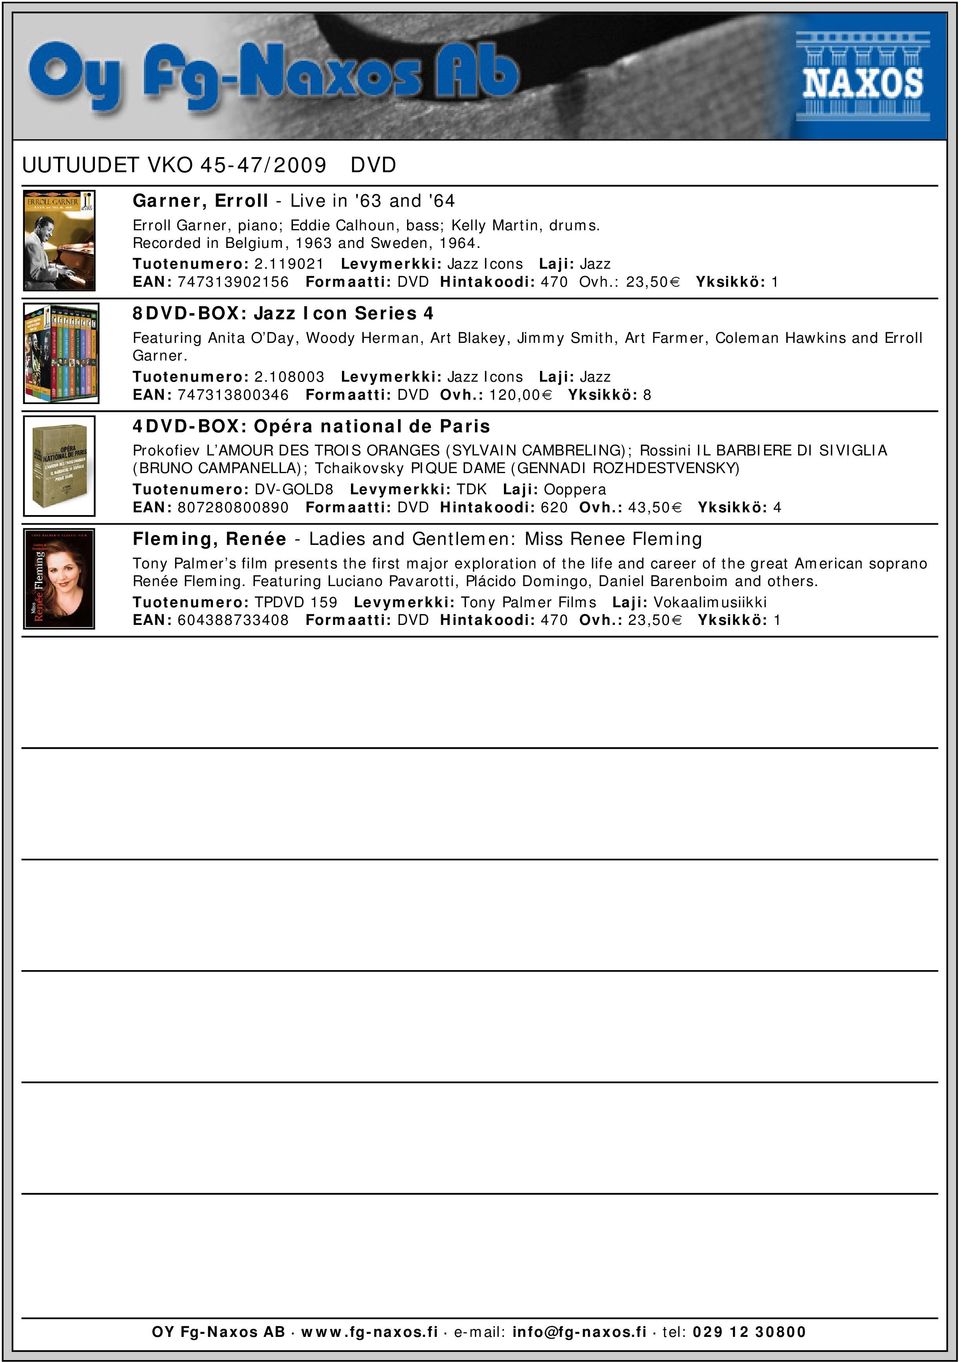 : 23,50 Yksikkö: 1 8DVD-BOX: Jazz Icon Series 4 Featuring Anita O Day, Woody Herman, Art Blakey, Jimmy Smith, Art Farmer, Coleman Hawkins and Erroll Garner. Tuotenumero: 2.